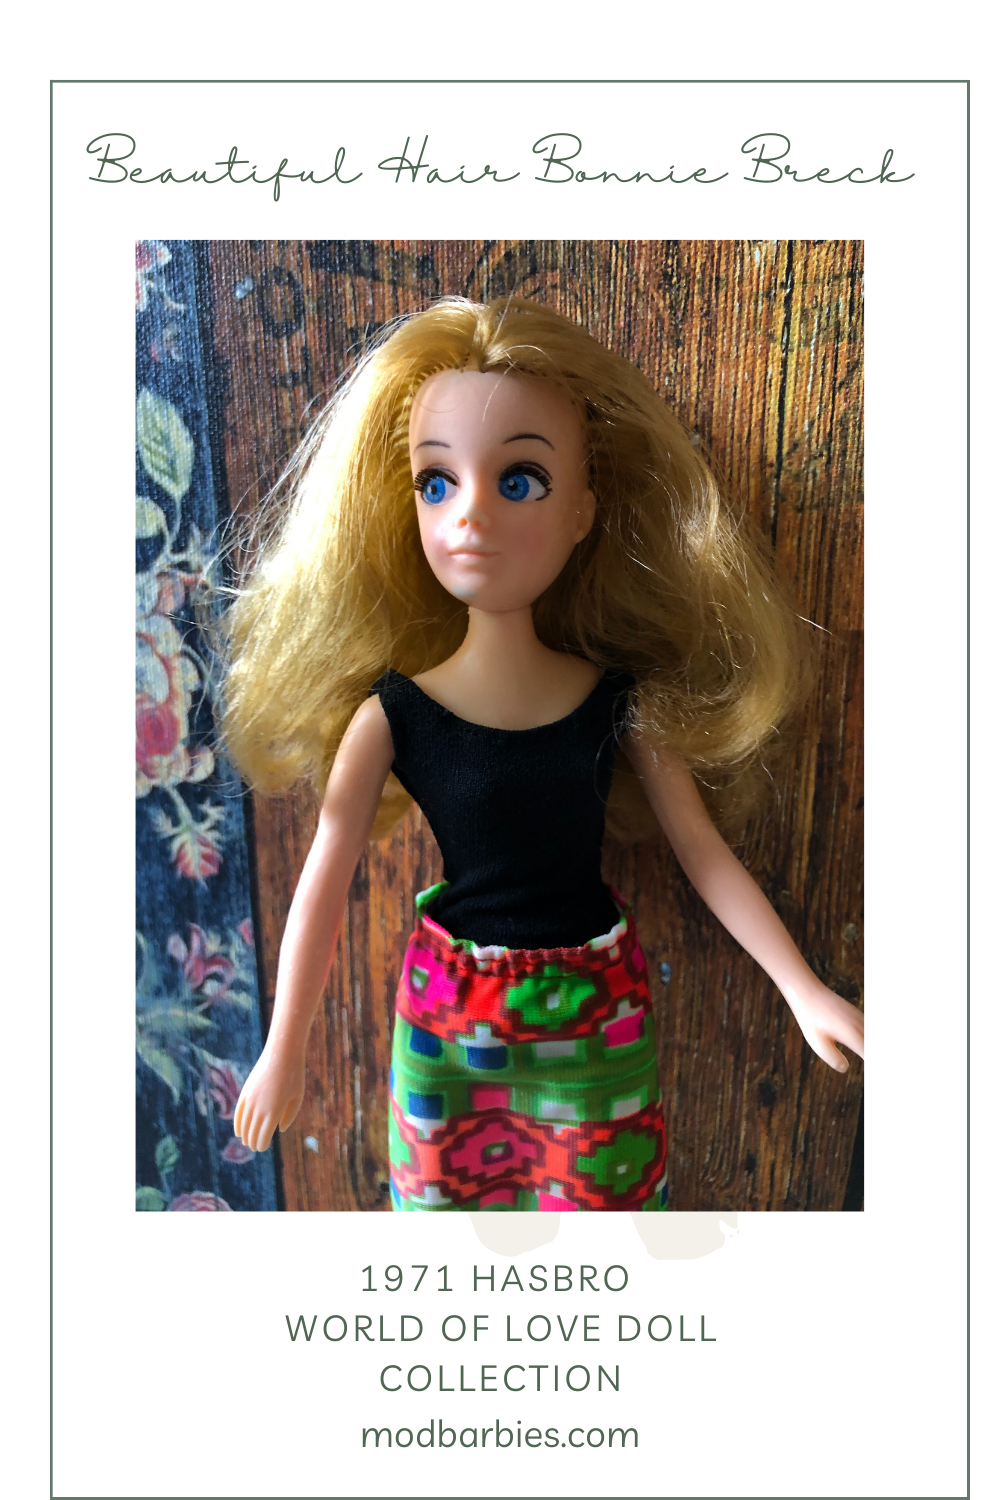 1971 World of Love doll named Beautiful Hair Bonnie Breck